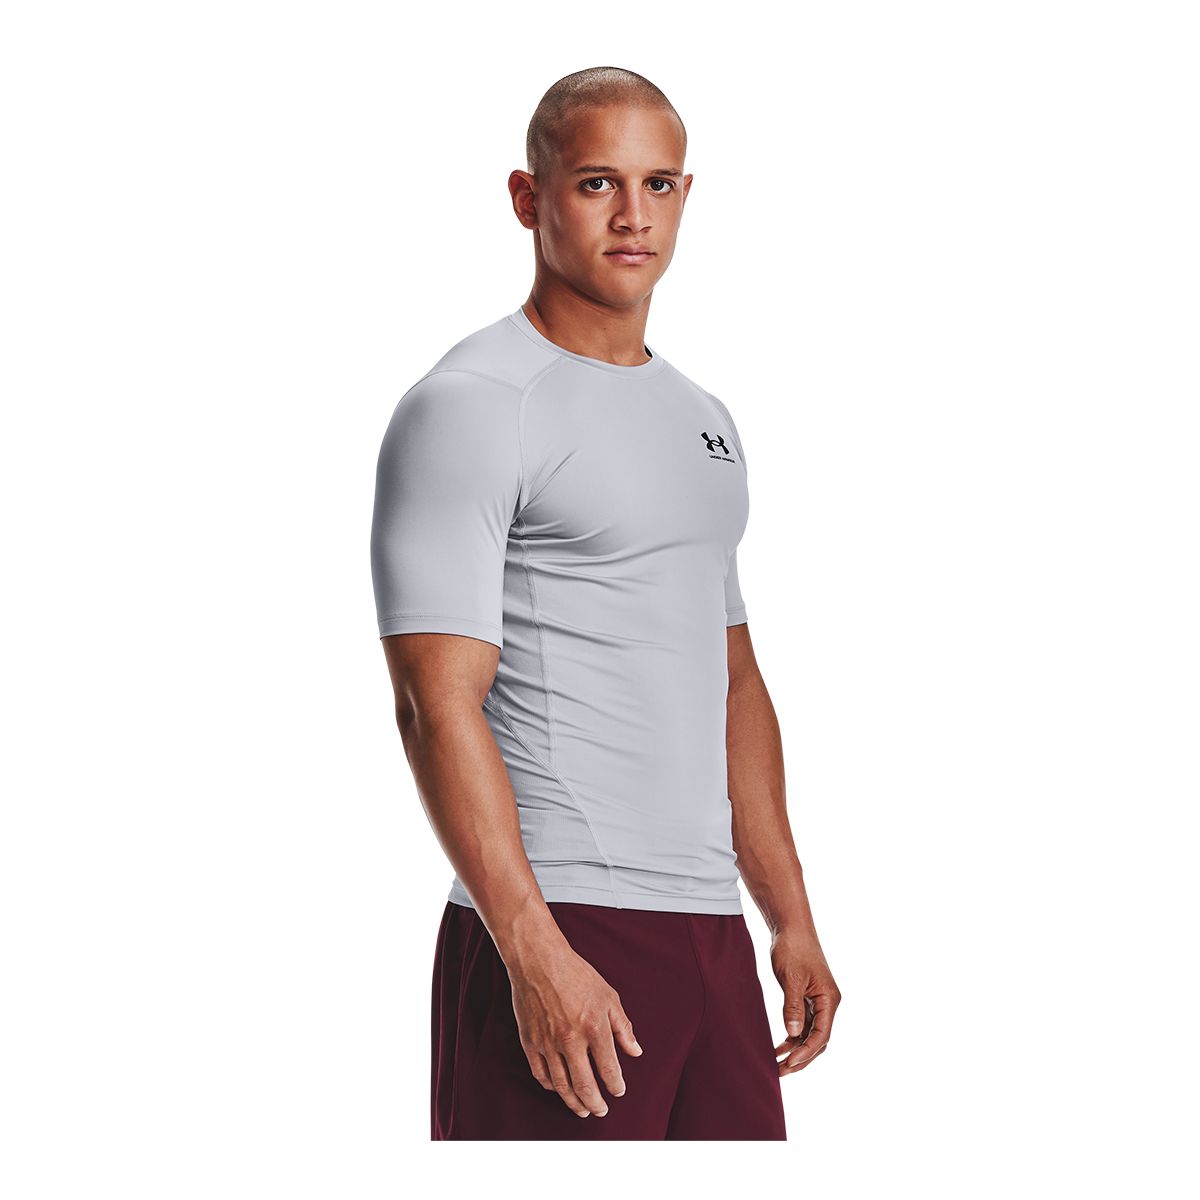 Under Armour HeatGear Compression Men's Tennis Shirt - Red/White